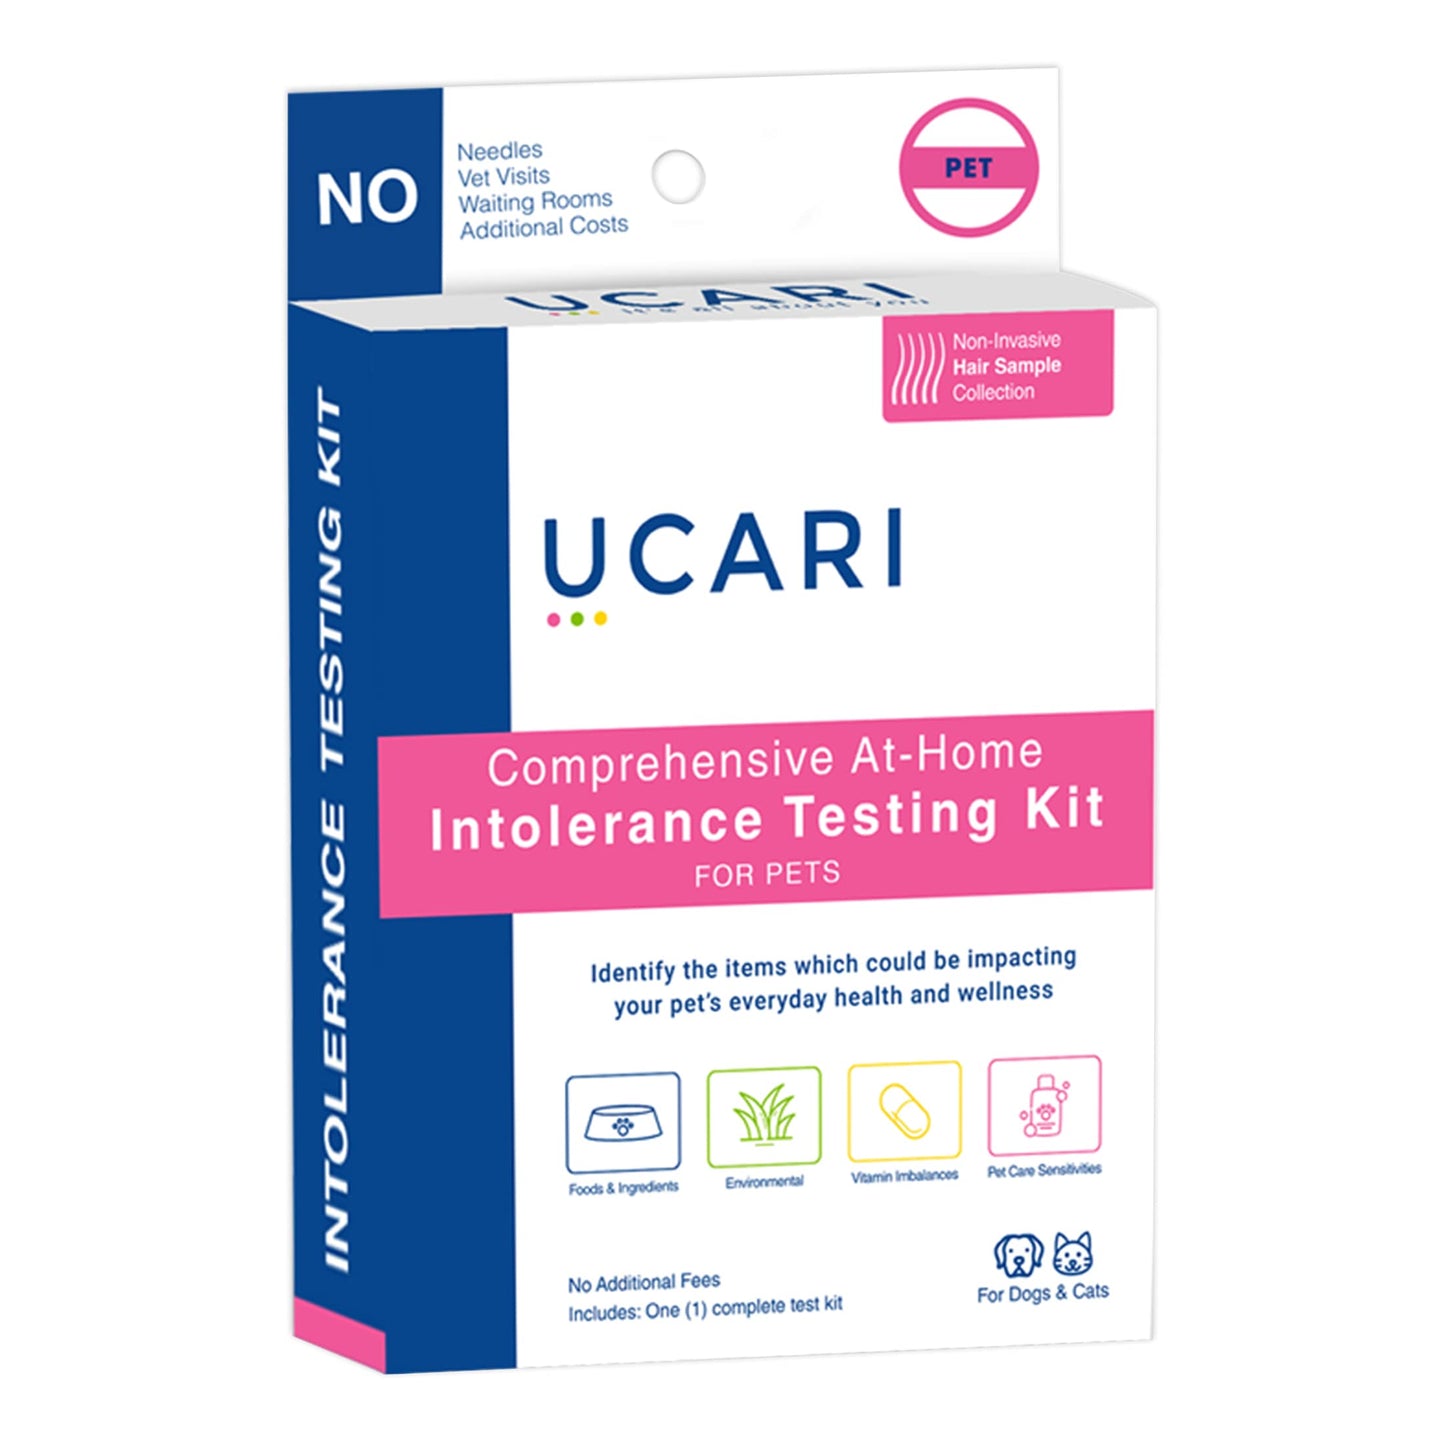 UCARI Comprehensive At-Home Intolerance Testing Kit For Pets